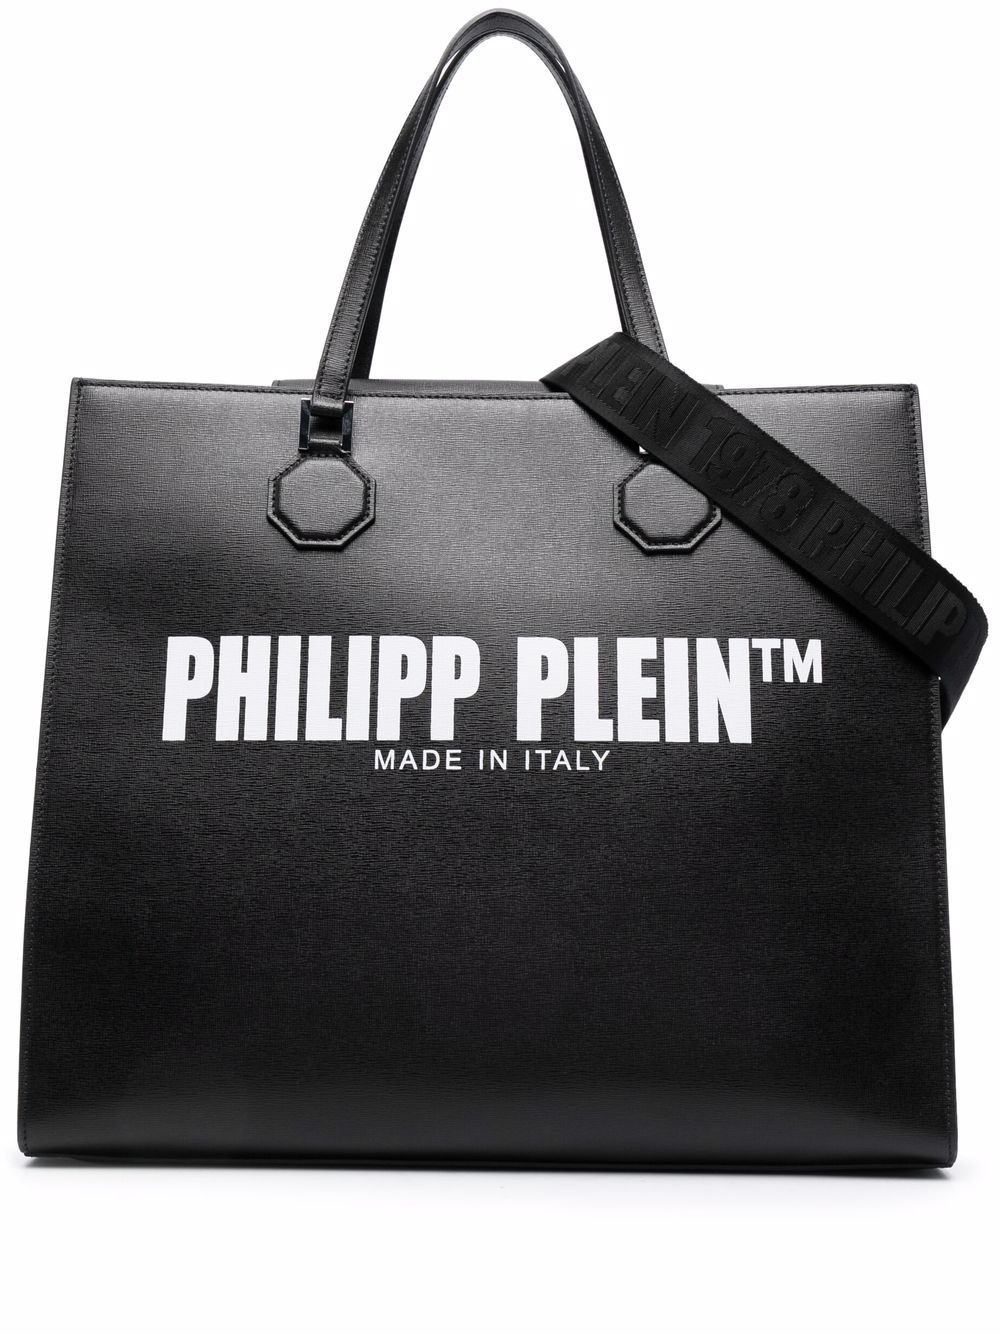 Philipp Plein TM leather tote bag - Black von Philipp Plein